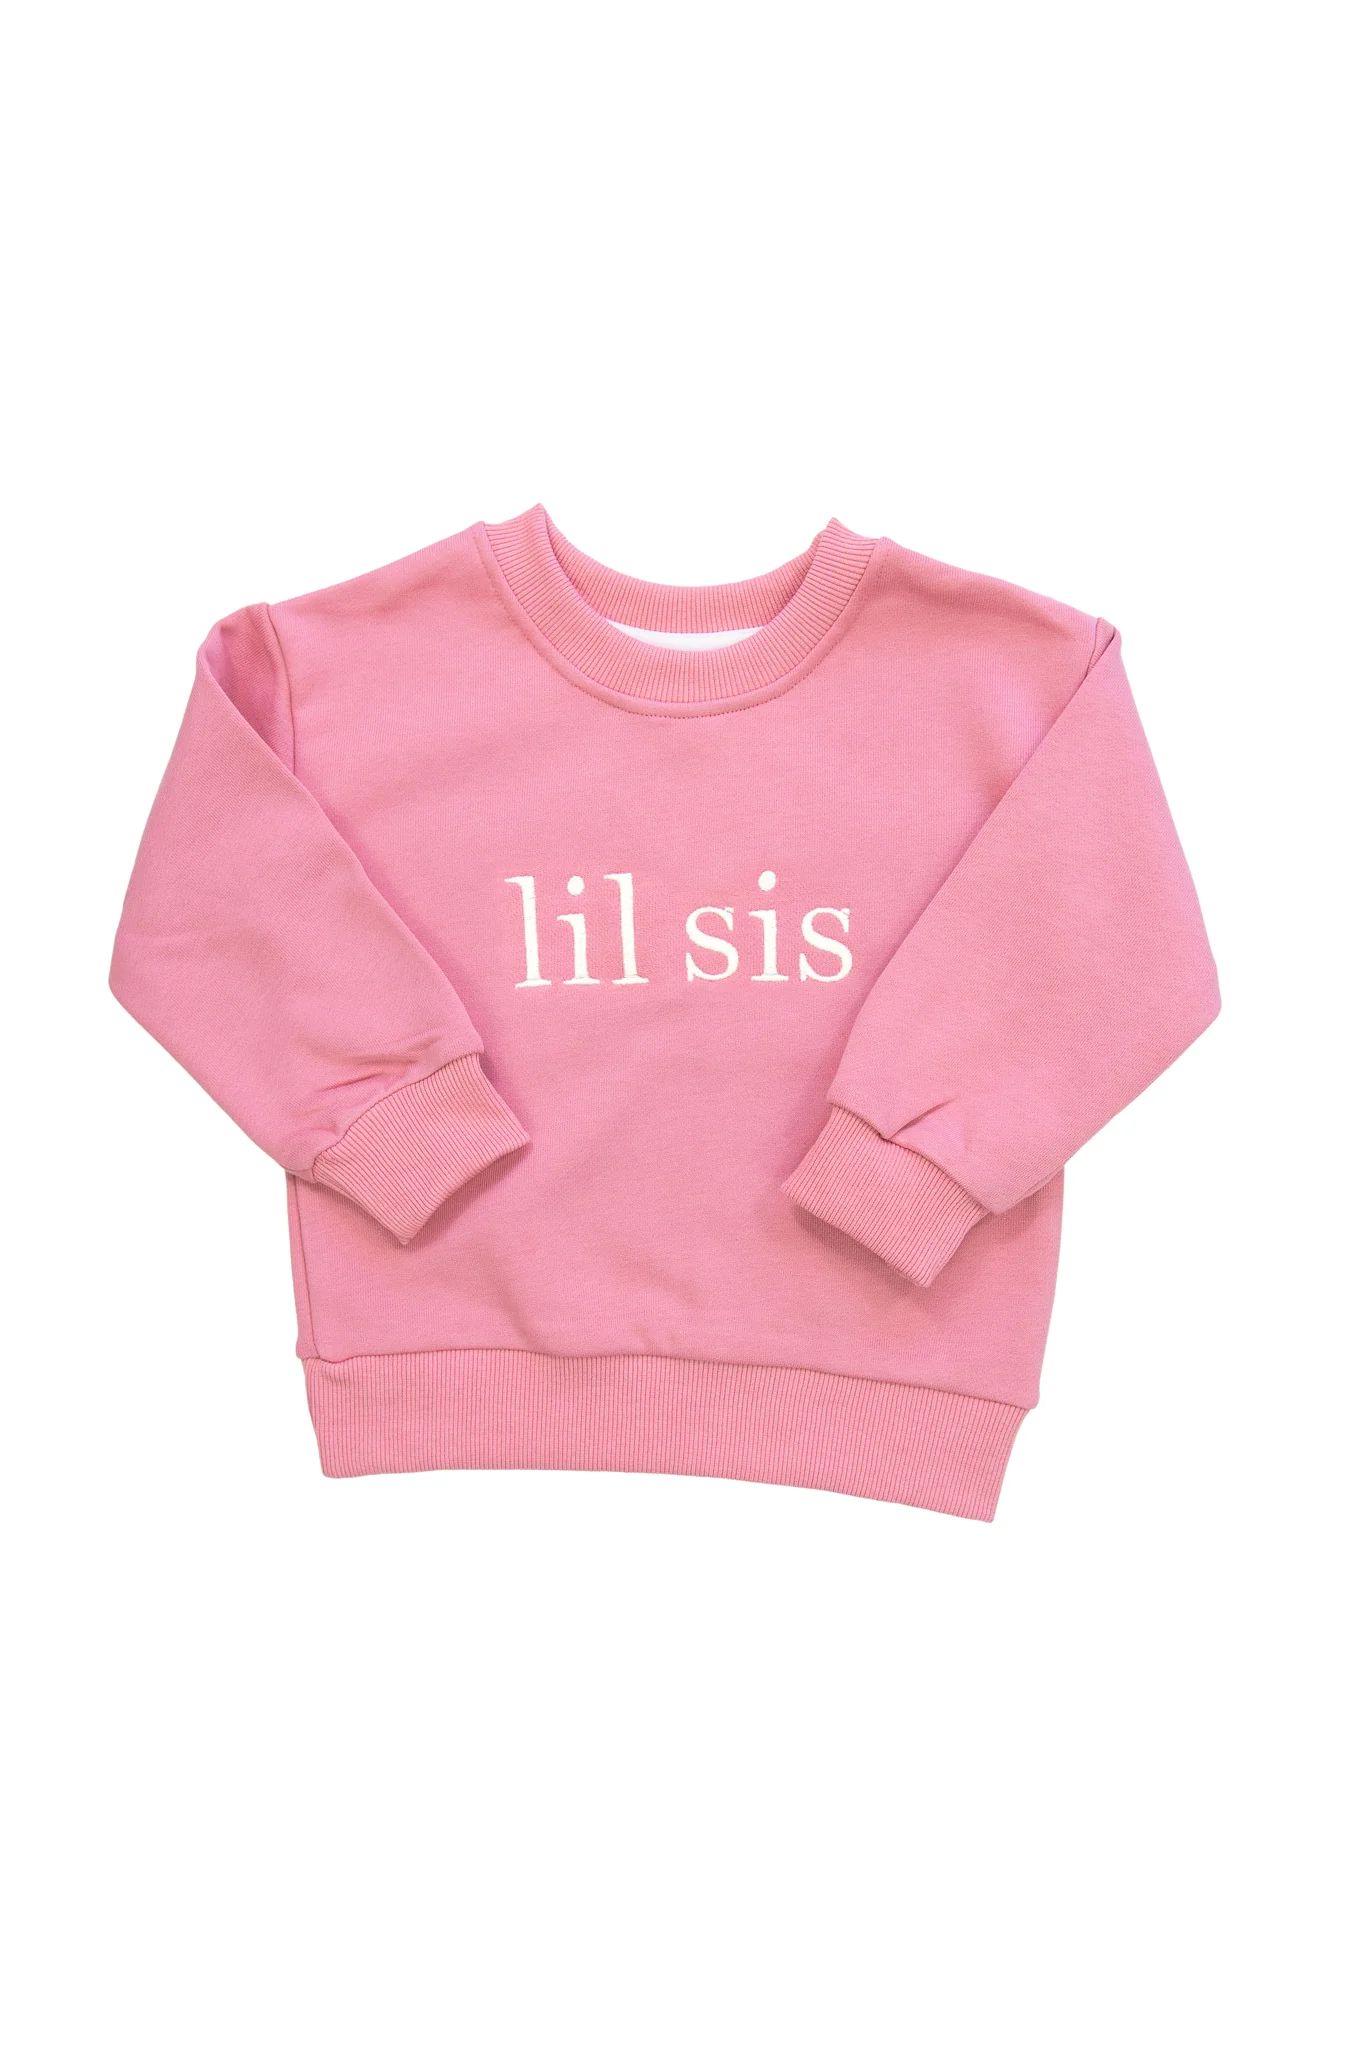 Girls Lil Sis Sweatshirt | Sugar Dumplin' Kids